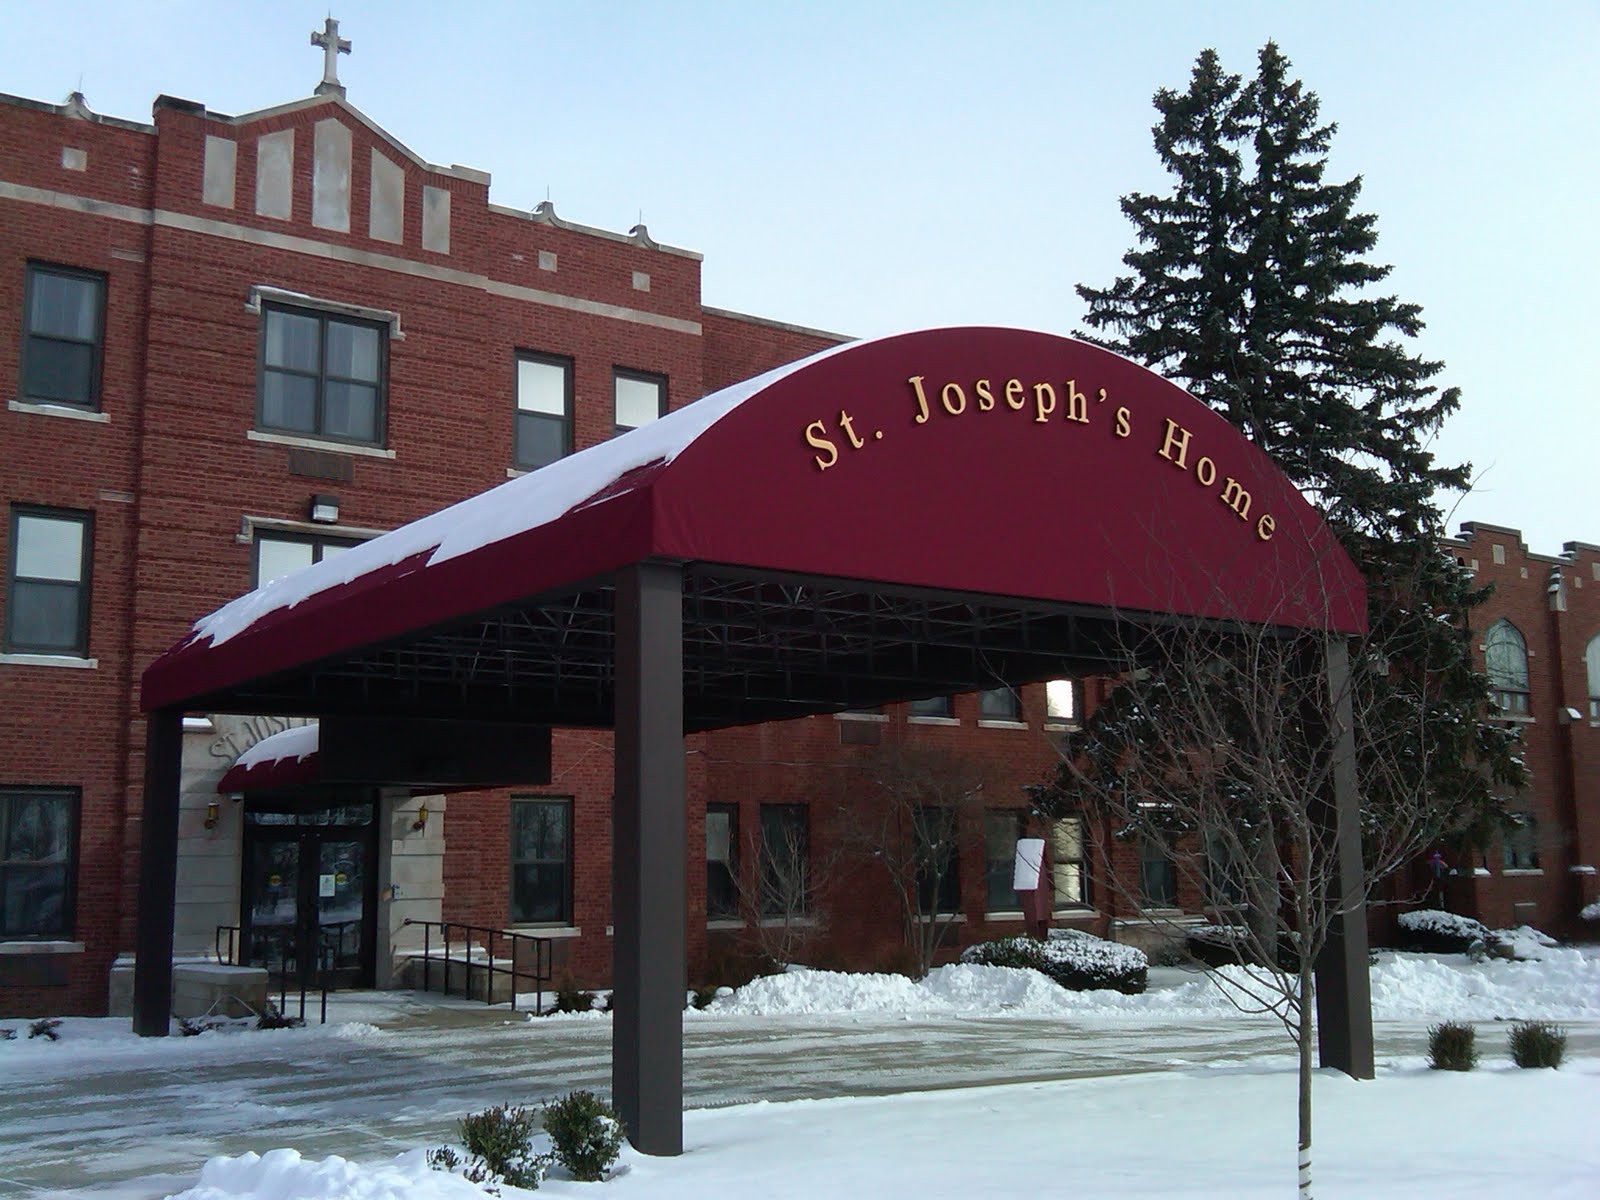 St. Joseph's House